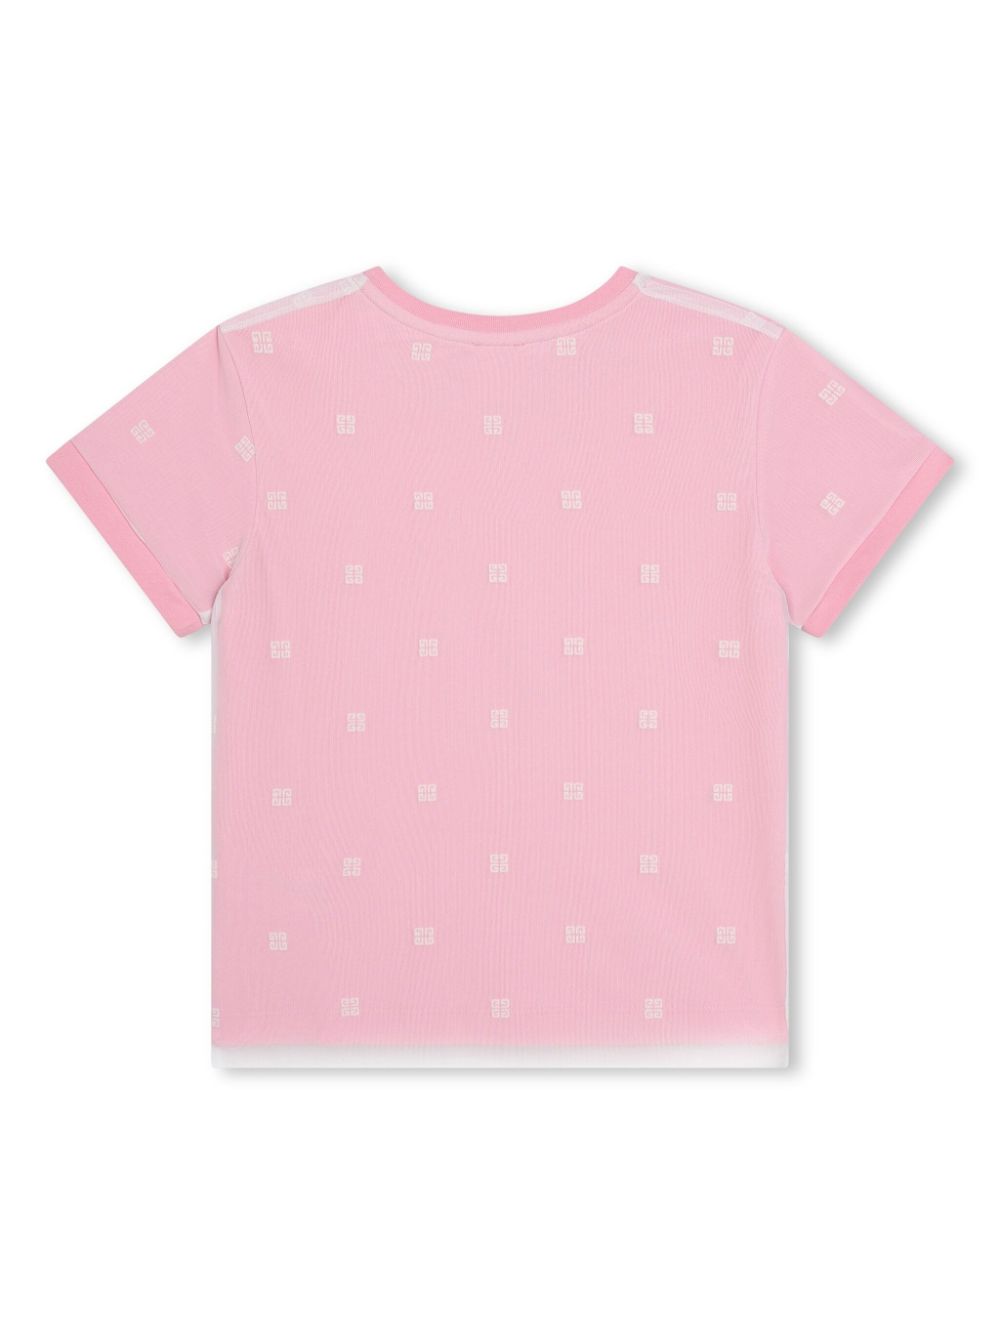 t-shirt fille rose